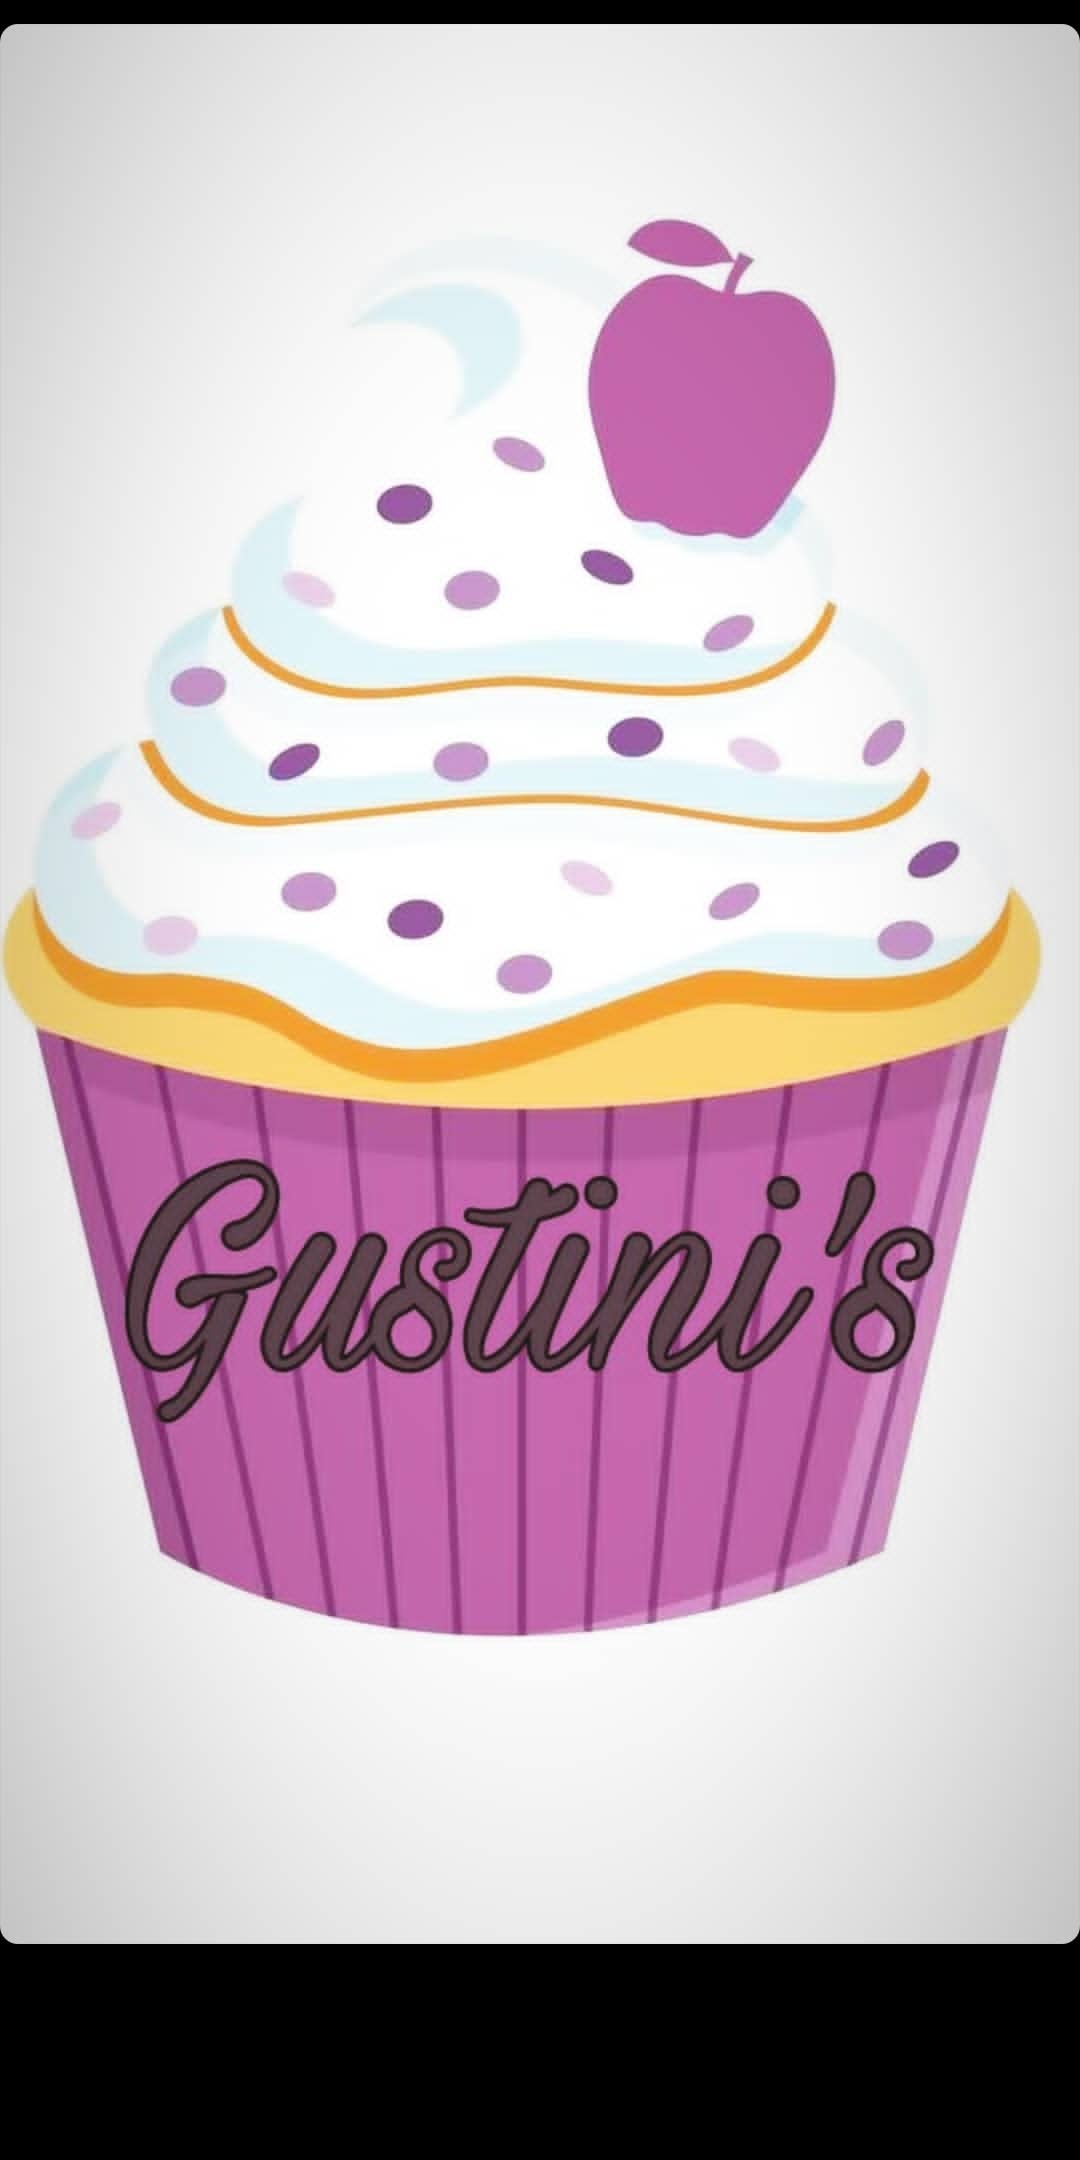 Gustini's